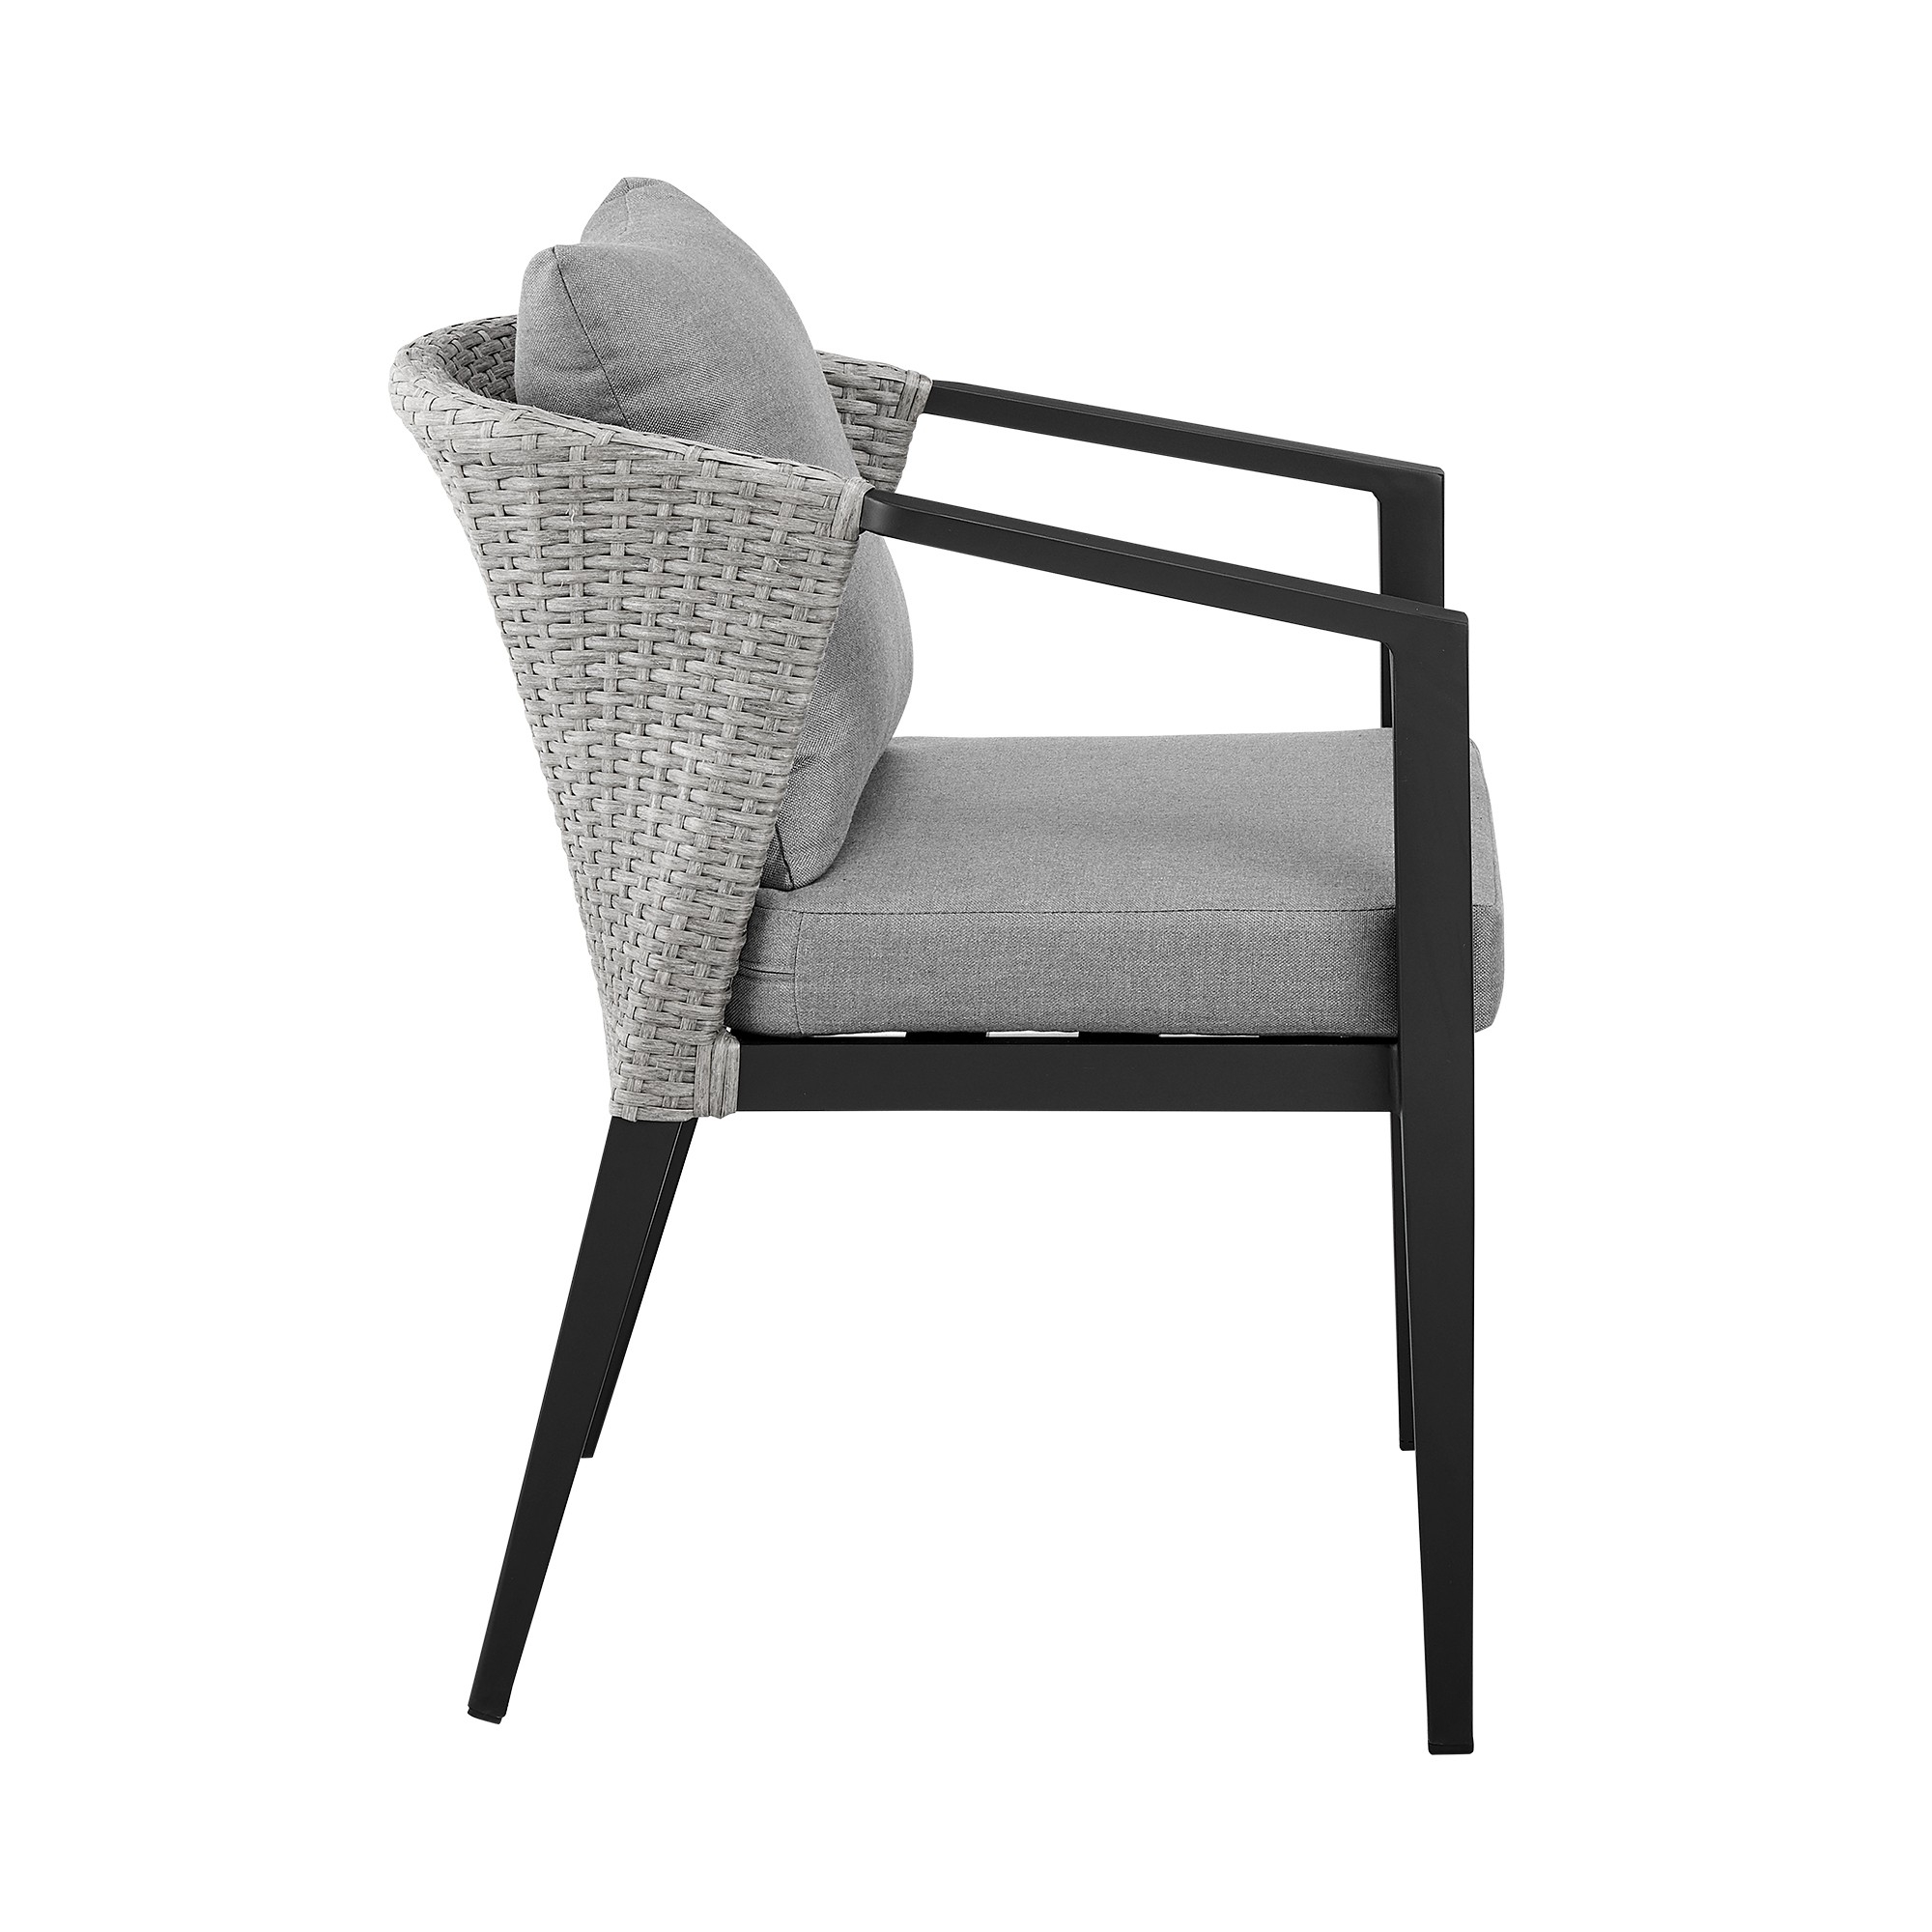 Nyla 22 Inch Patio Dining Chair, Set Of 2, Black Aluminum, Wicker, Gray- Saltoro Sherpi